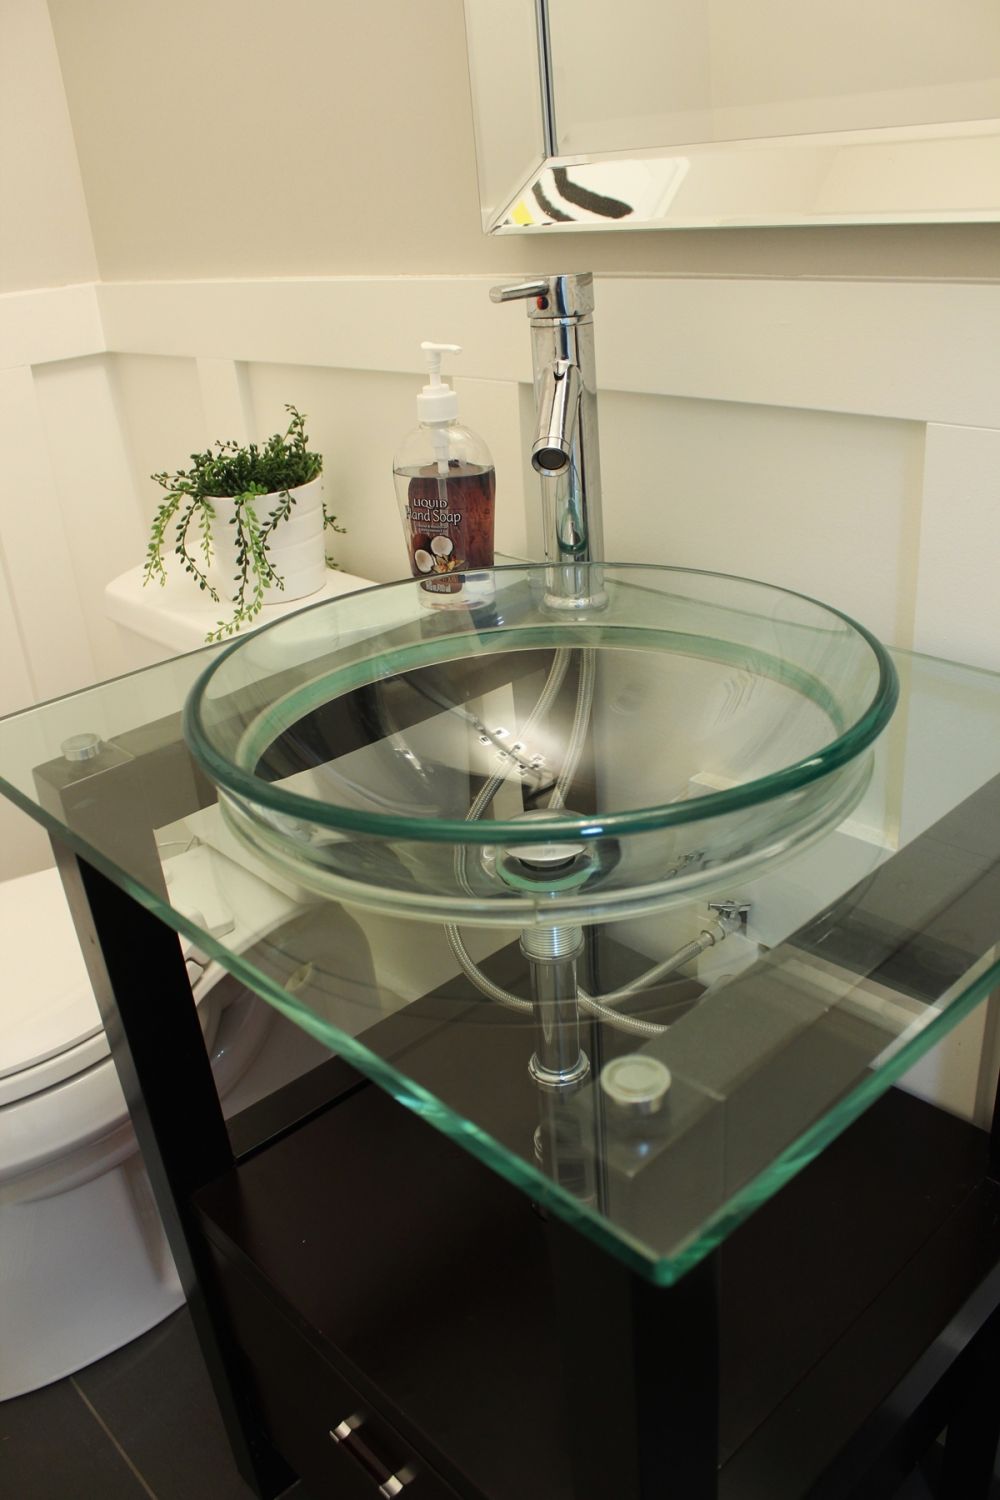 Bathroom with glass bowl sink.